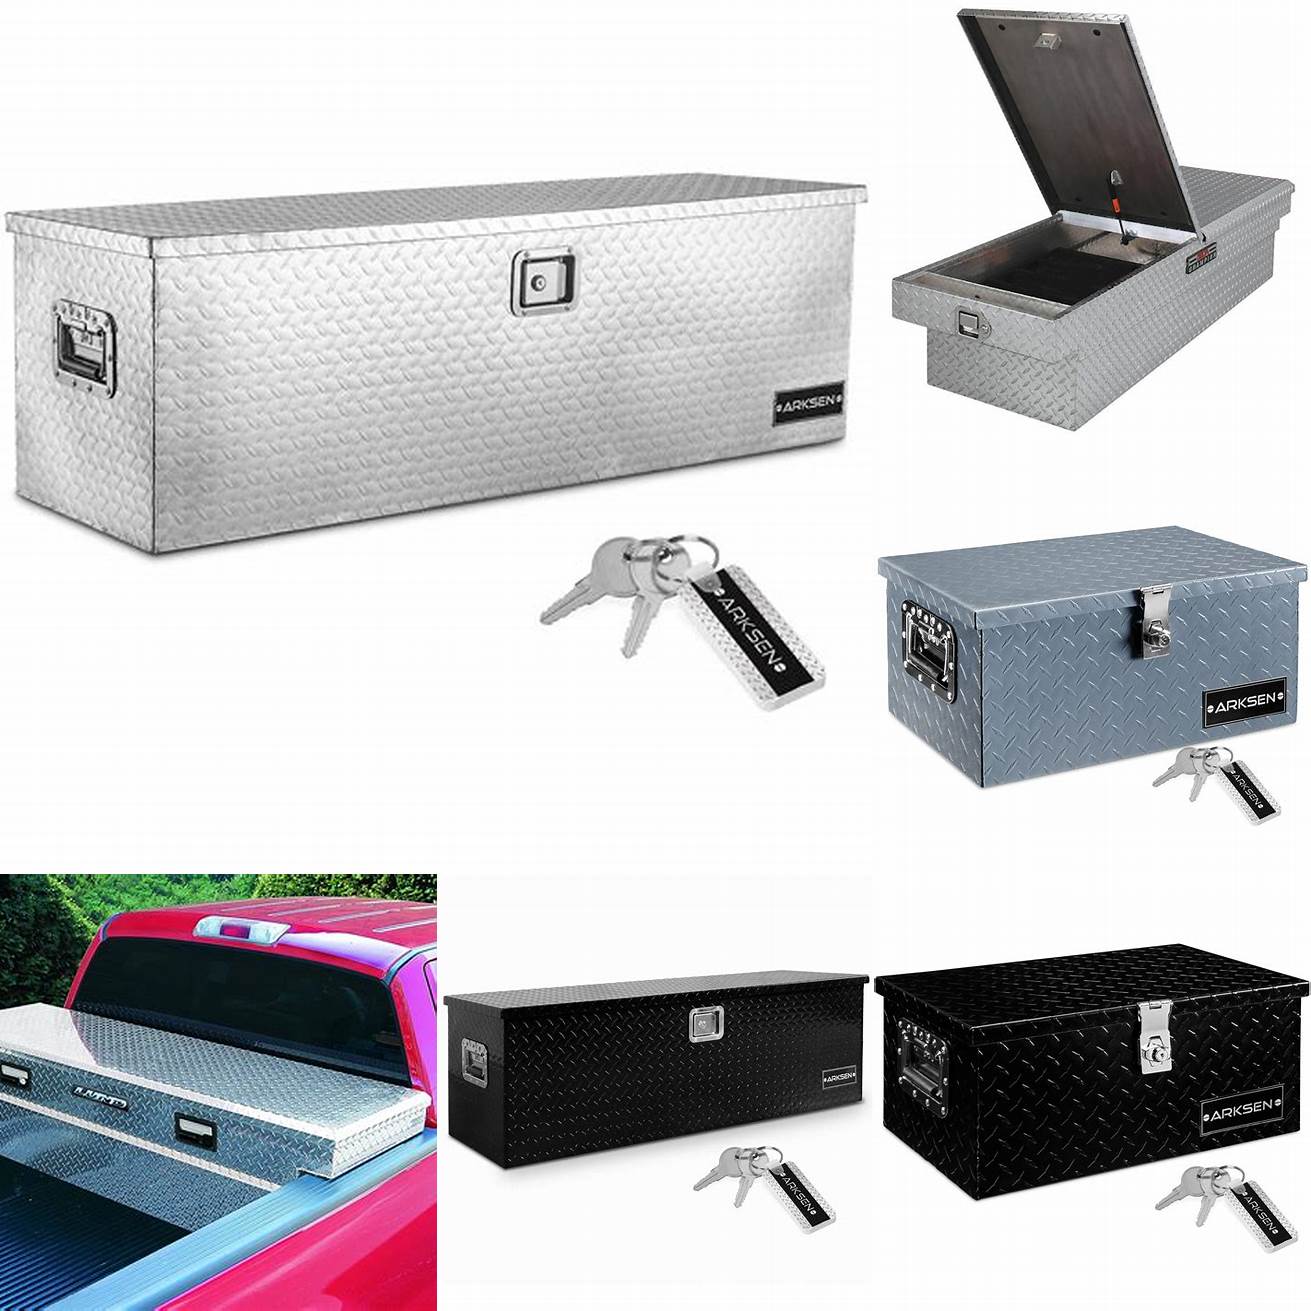 Aluminum truck bed storage box